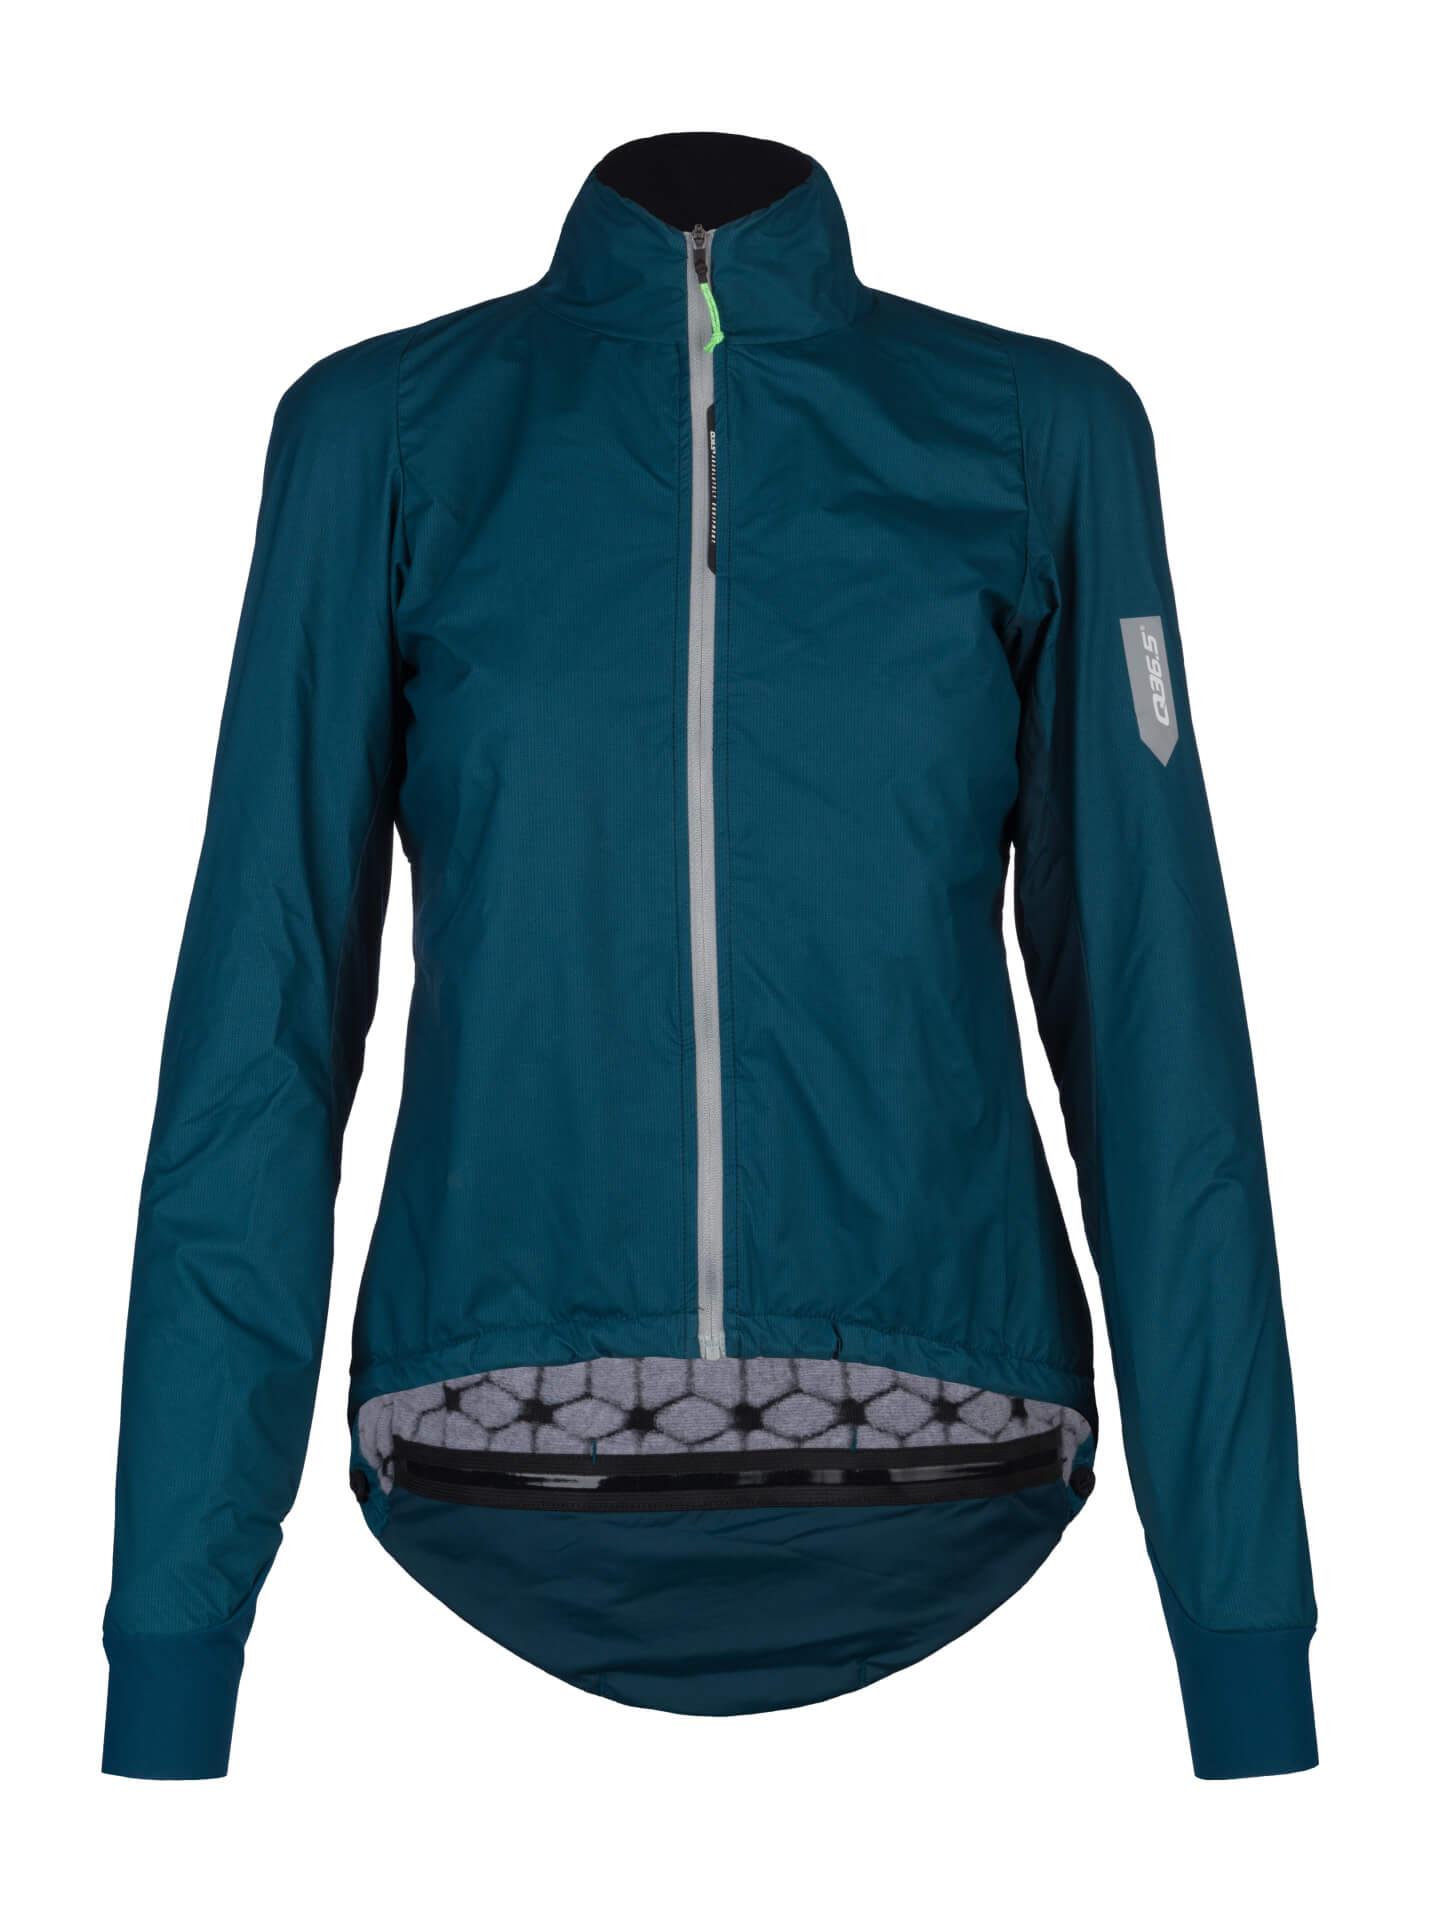 Women's Adventure winter jacket Australian Green • Q36.5